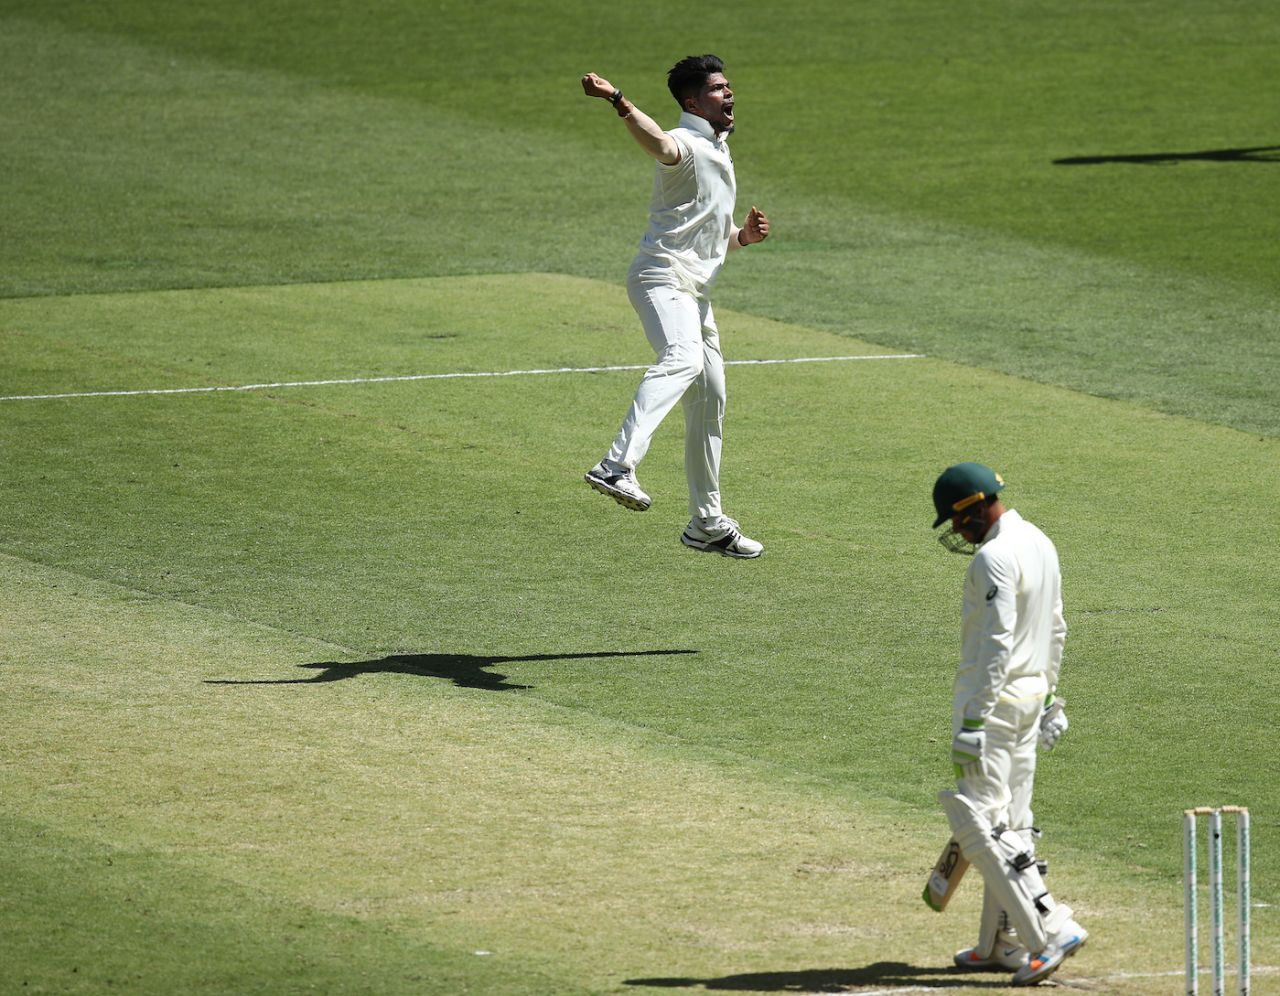 Umesh Yadav leaps with joy after dismissing Usman Khawaja, Australia v India, 2nd Test, Perth, 1st day, December 14, 2018